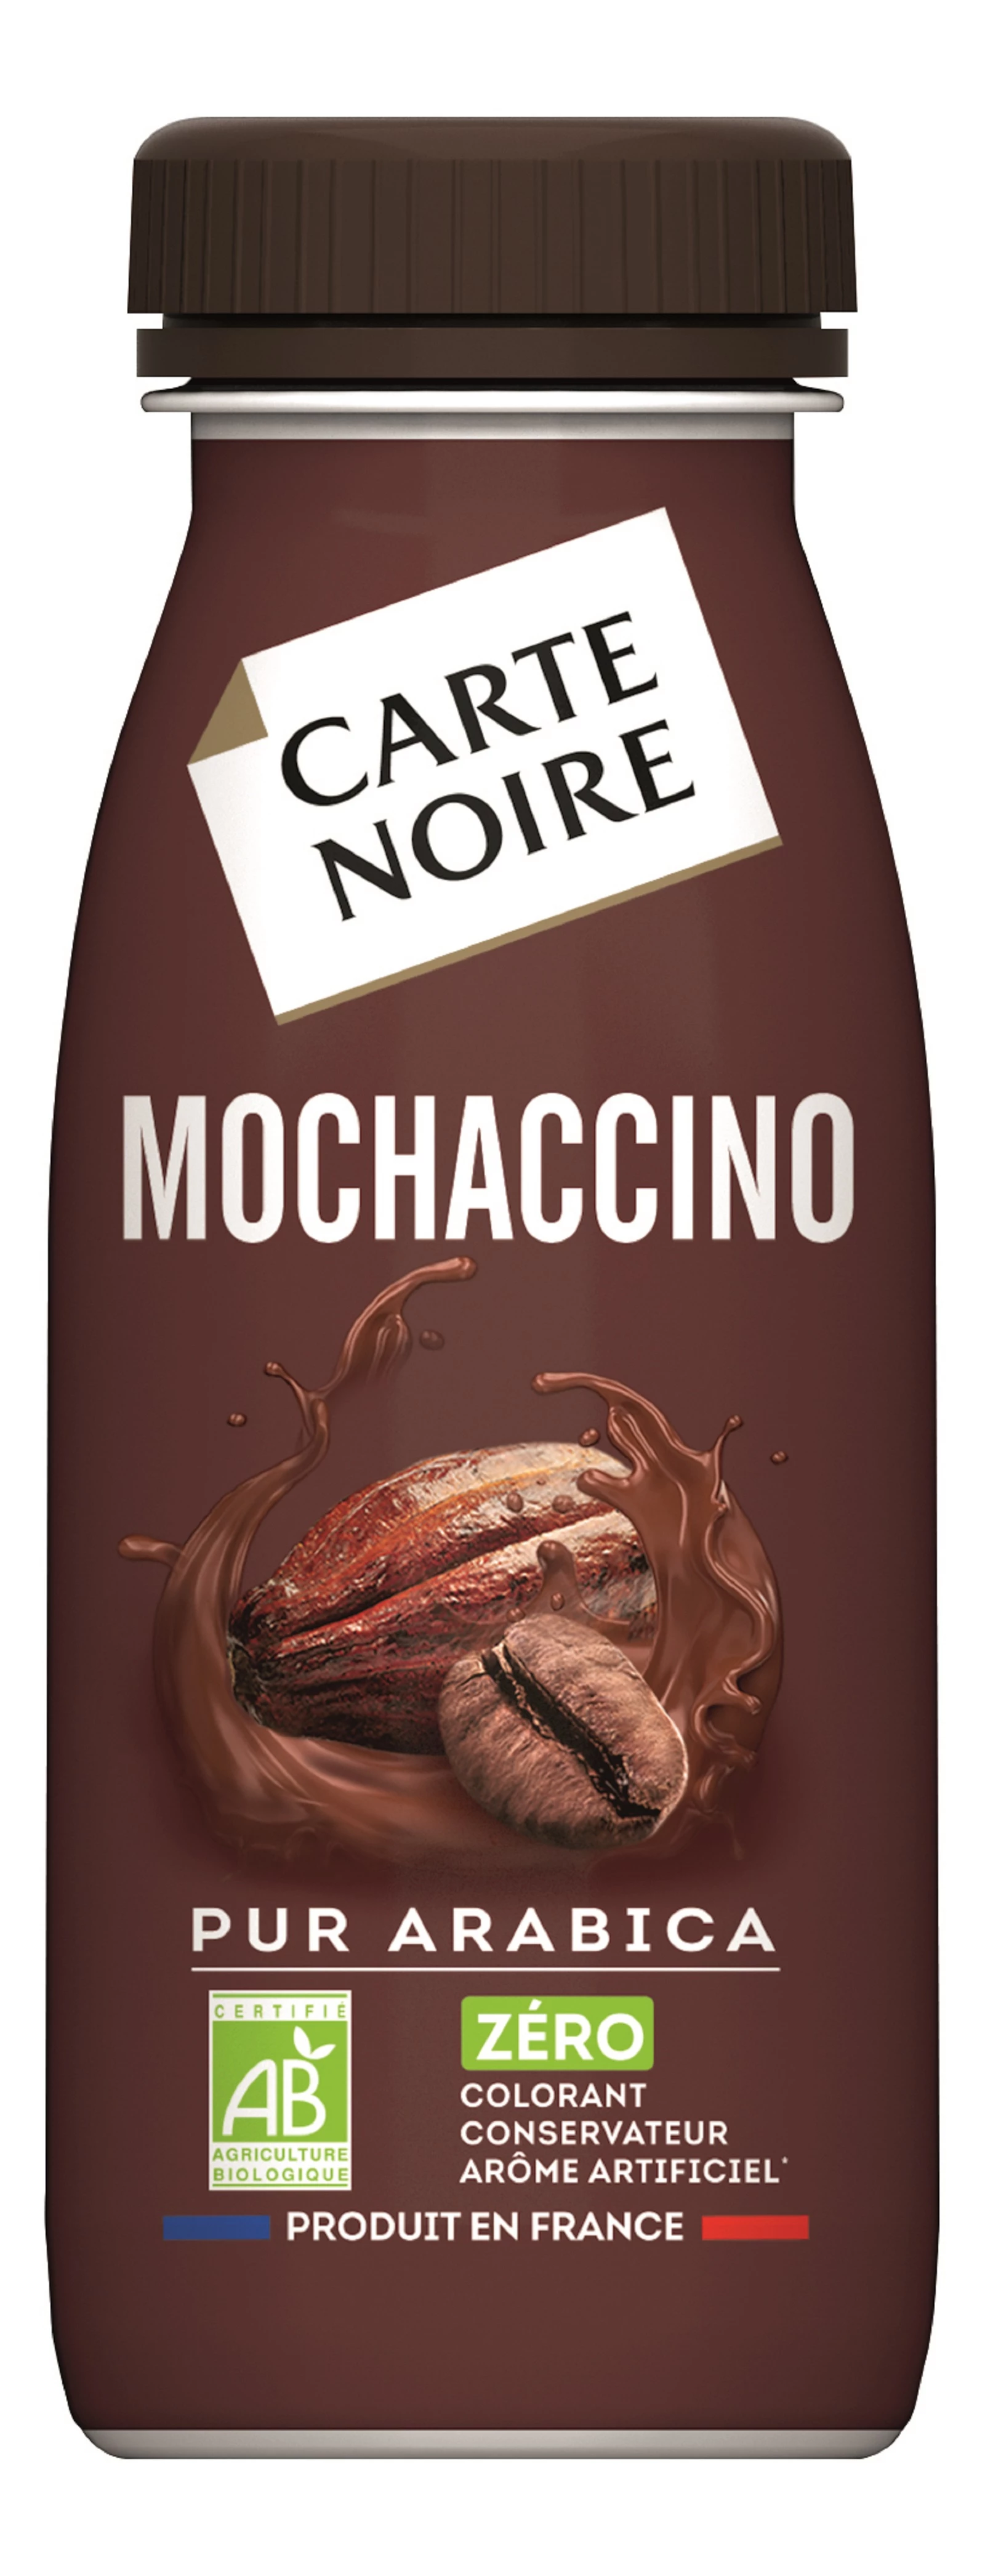 Organic Mochaccino coffee drink 25cl - CARTE NOIRE